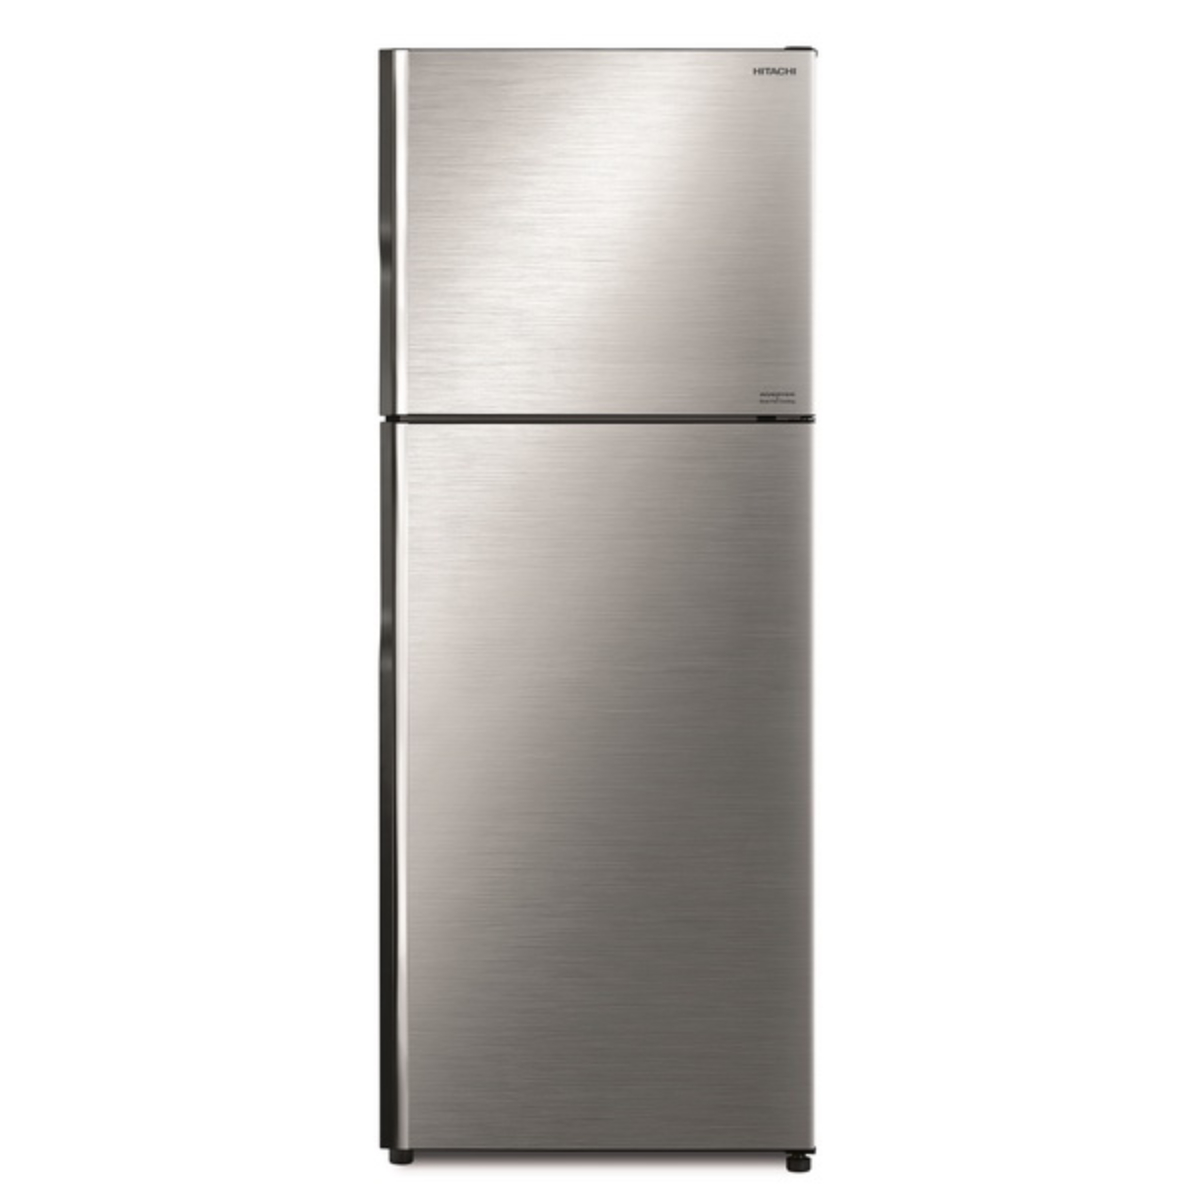 Hitachi Double Doors Refrigerator (14.4 Cubic, Brilliant Silver) R-VX400PF BSL